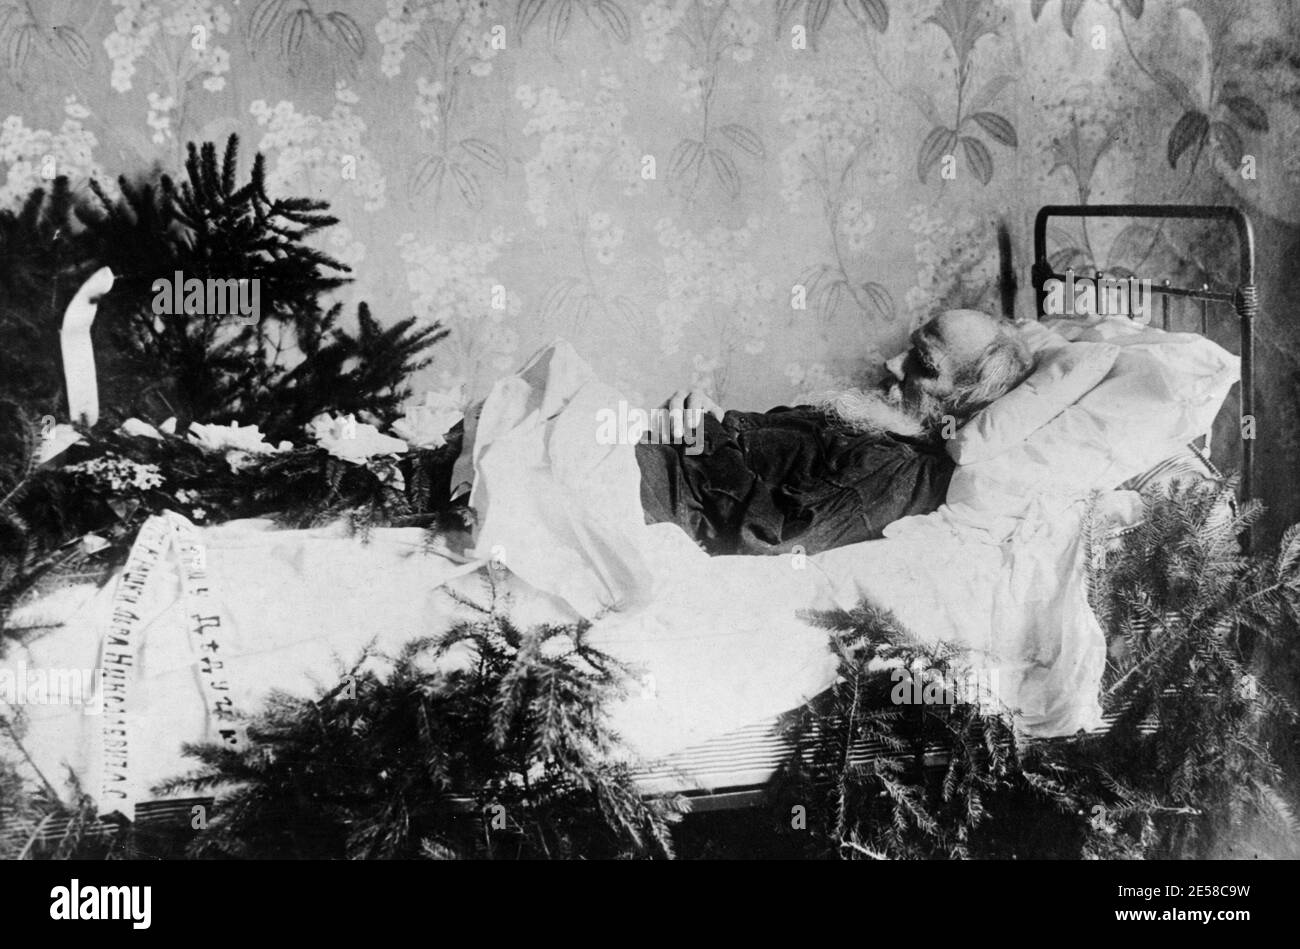 1910 , RUSSIE : le célèbre poète et écrivain russe Lev Nikolaevic TOLSTOJ ( 1828 - 1910 ) Rester mort au lit dans sa maison d'Astapovo - POST MORTEM - post mortem - SCRITTORE - LETTERATO - LETTERATURA - LITTÉRATURE - POÈTE - POETA - POÉSIE - POESIA - TOLSTOÏ - TOLSTOÏ - Leone - letto di morte - morto - defunto - cavere - longue barbe blanche - lunga barba bianca - RUSSIE - catafalco - pompe funebri onoranze - uomo vecchio anziano - ancien homme - --- Archivio GBB Banque D'Images